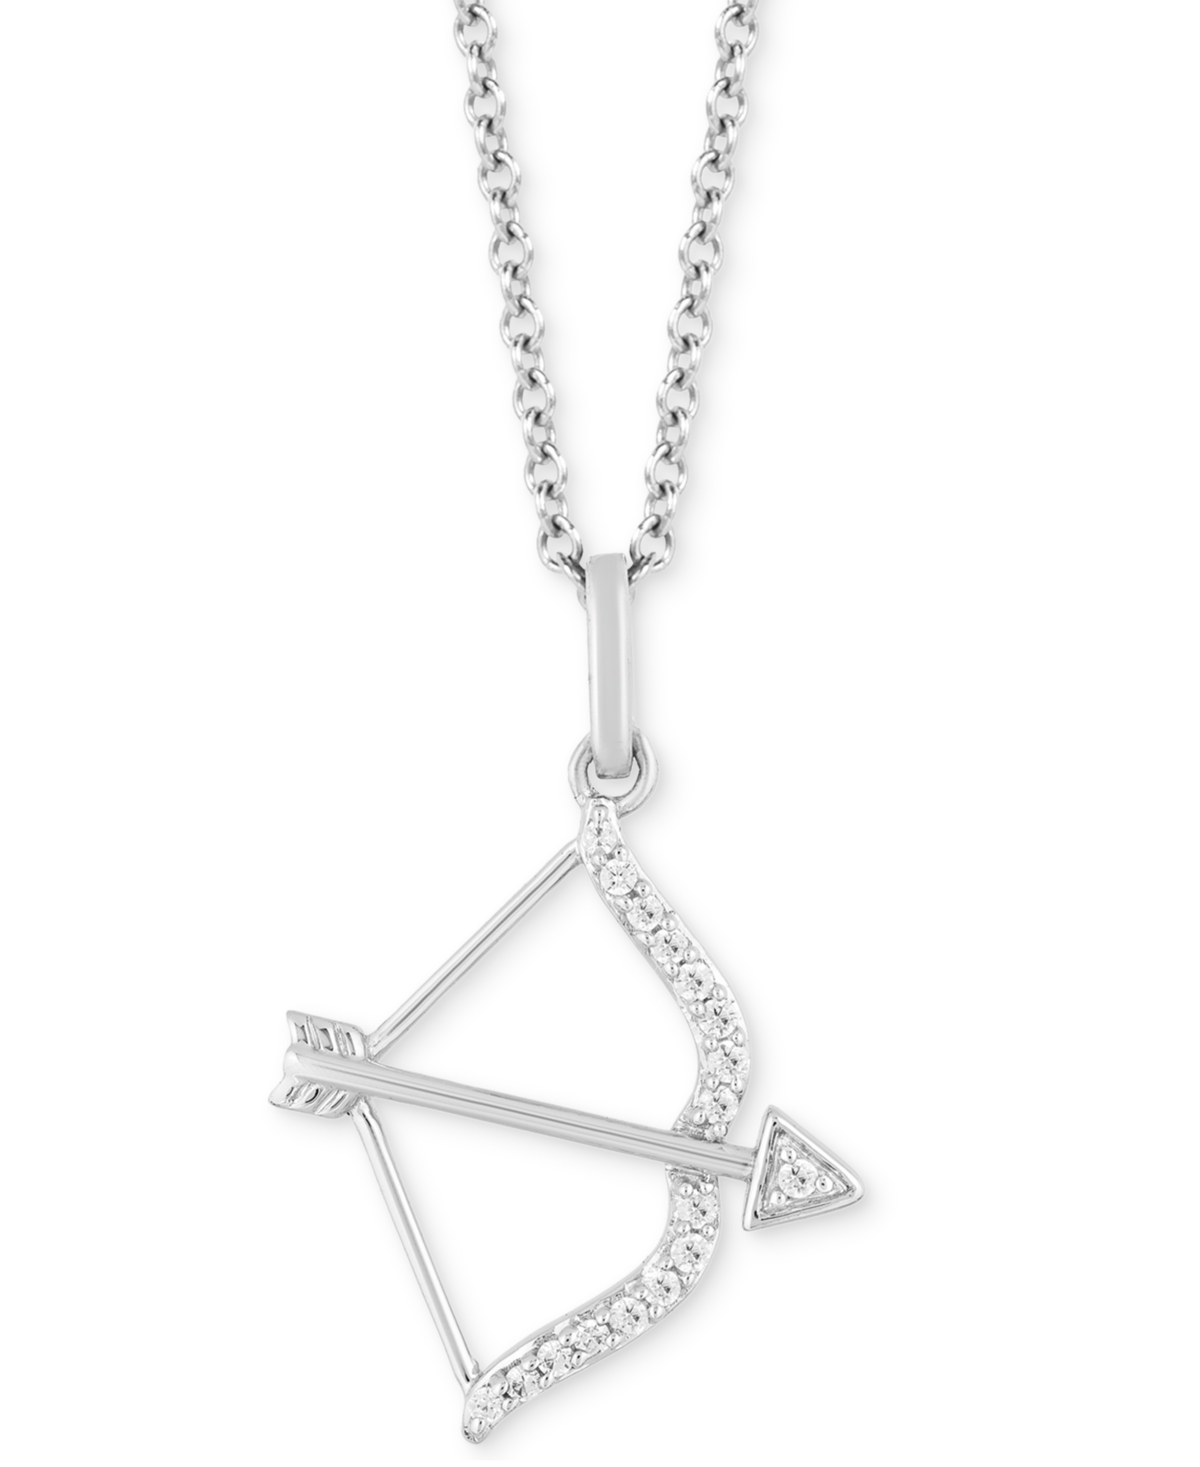 Hallmark Diamonds Tokens by Hallmark Diamonds Bow & Arrow Strength pendant (1/10 ct. t.w.) in Sterling Silver, 16" + 2" extender